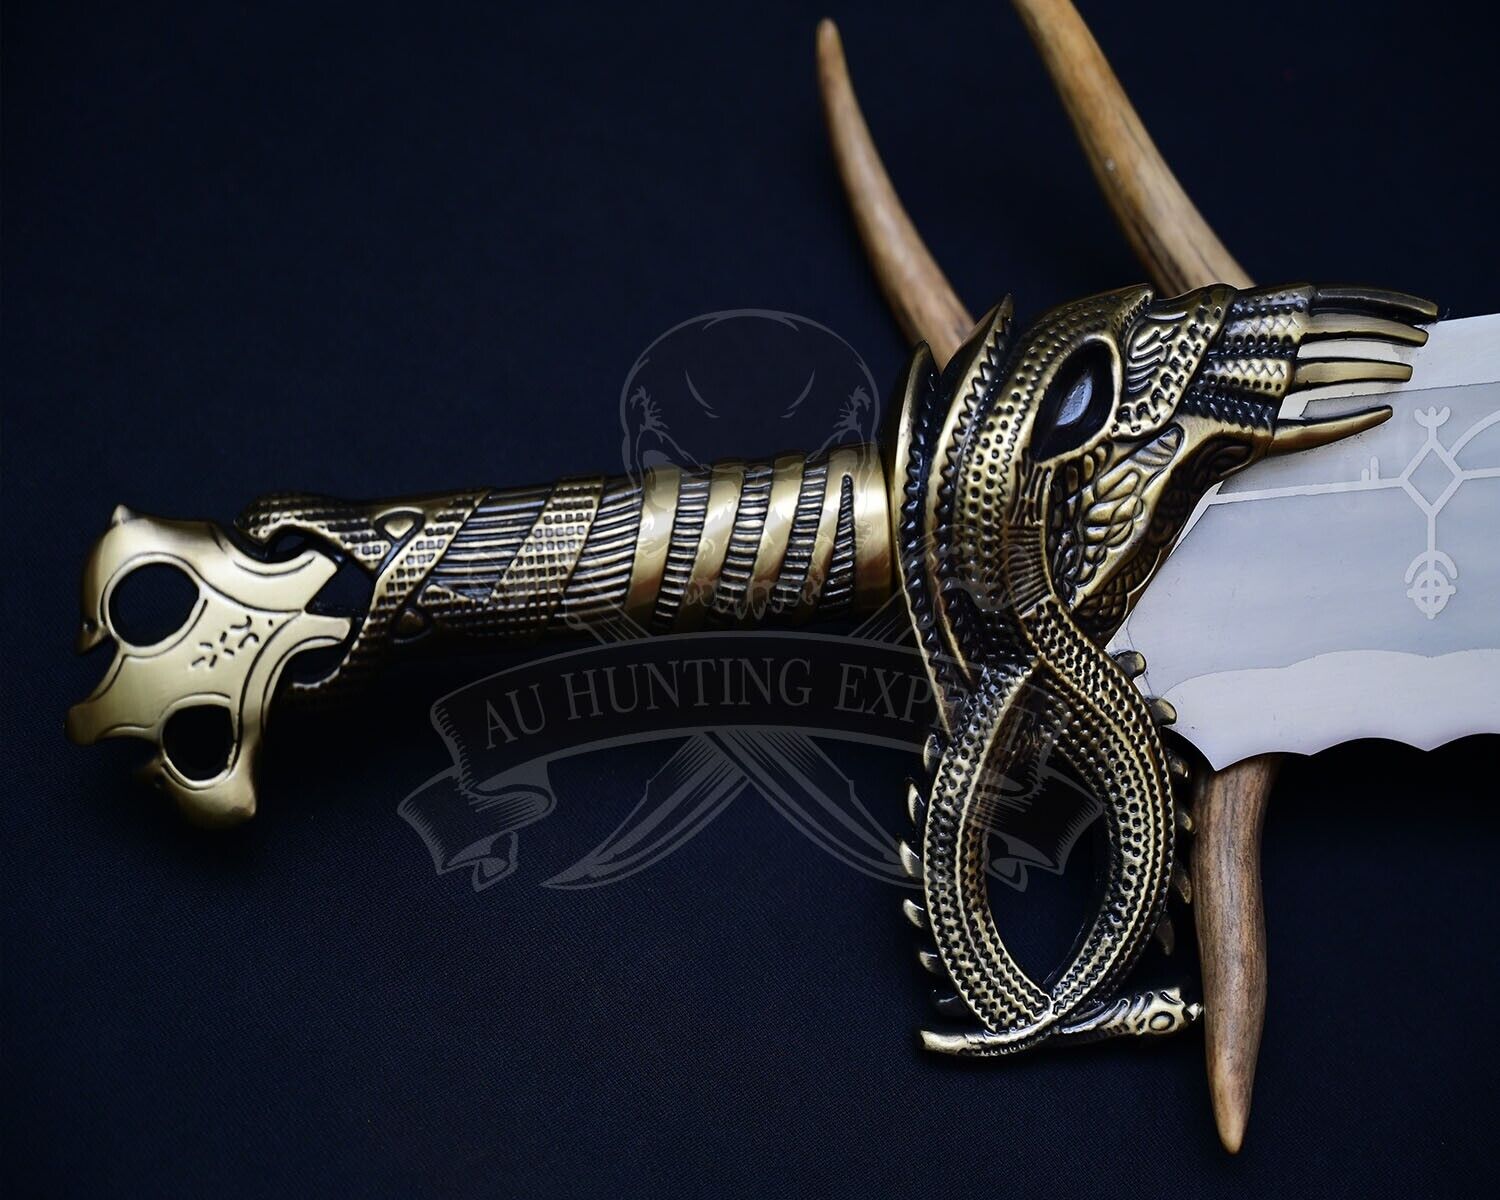 God of War Kratos Blades of Chaos Metal Twin Blades Sword Cosplay Weapon Replica